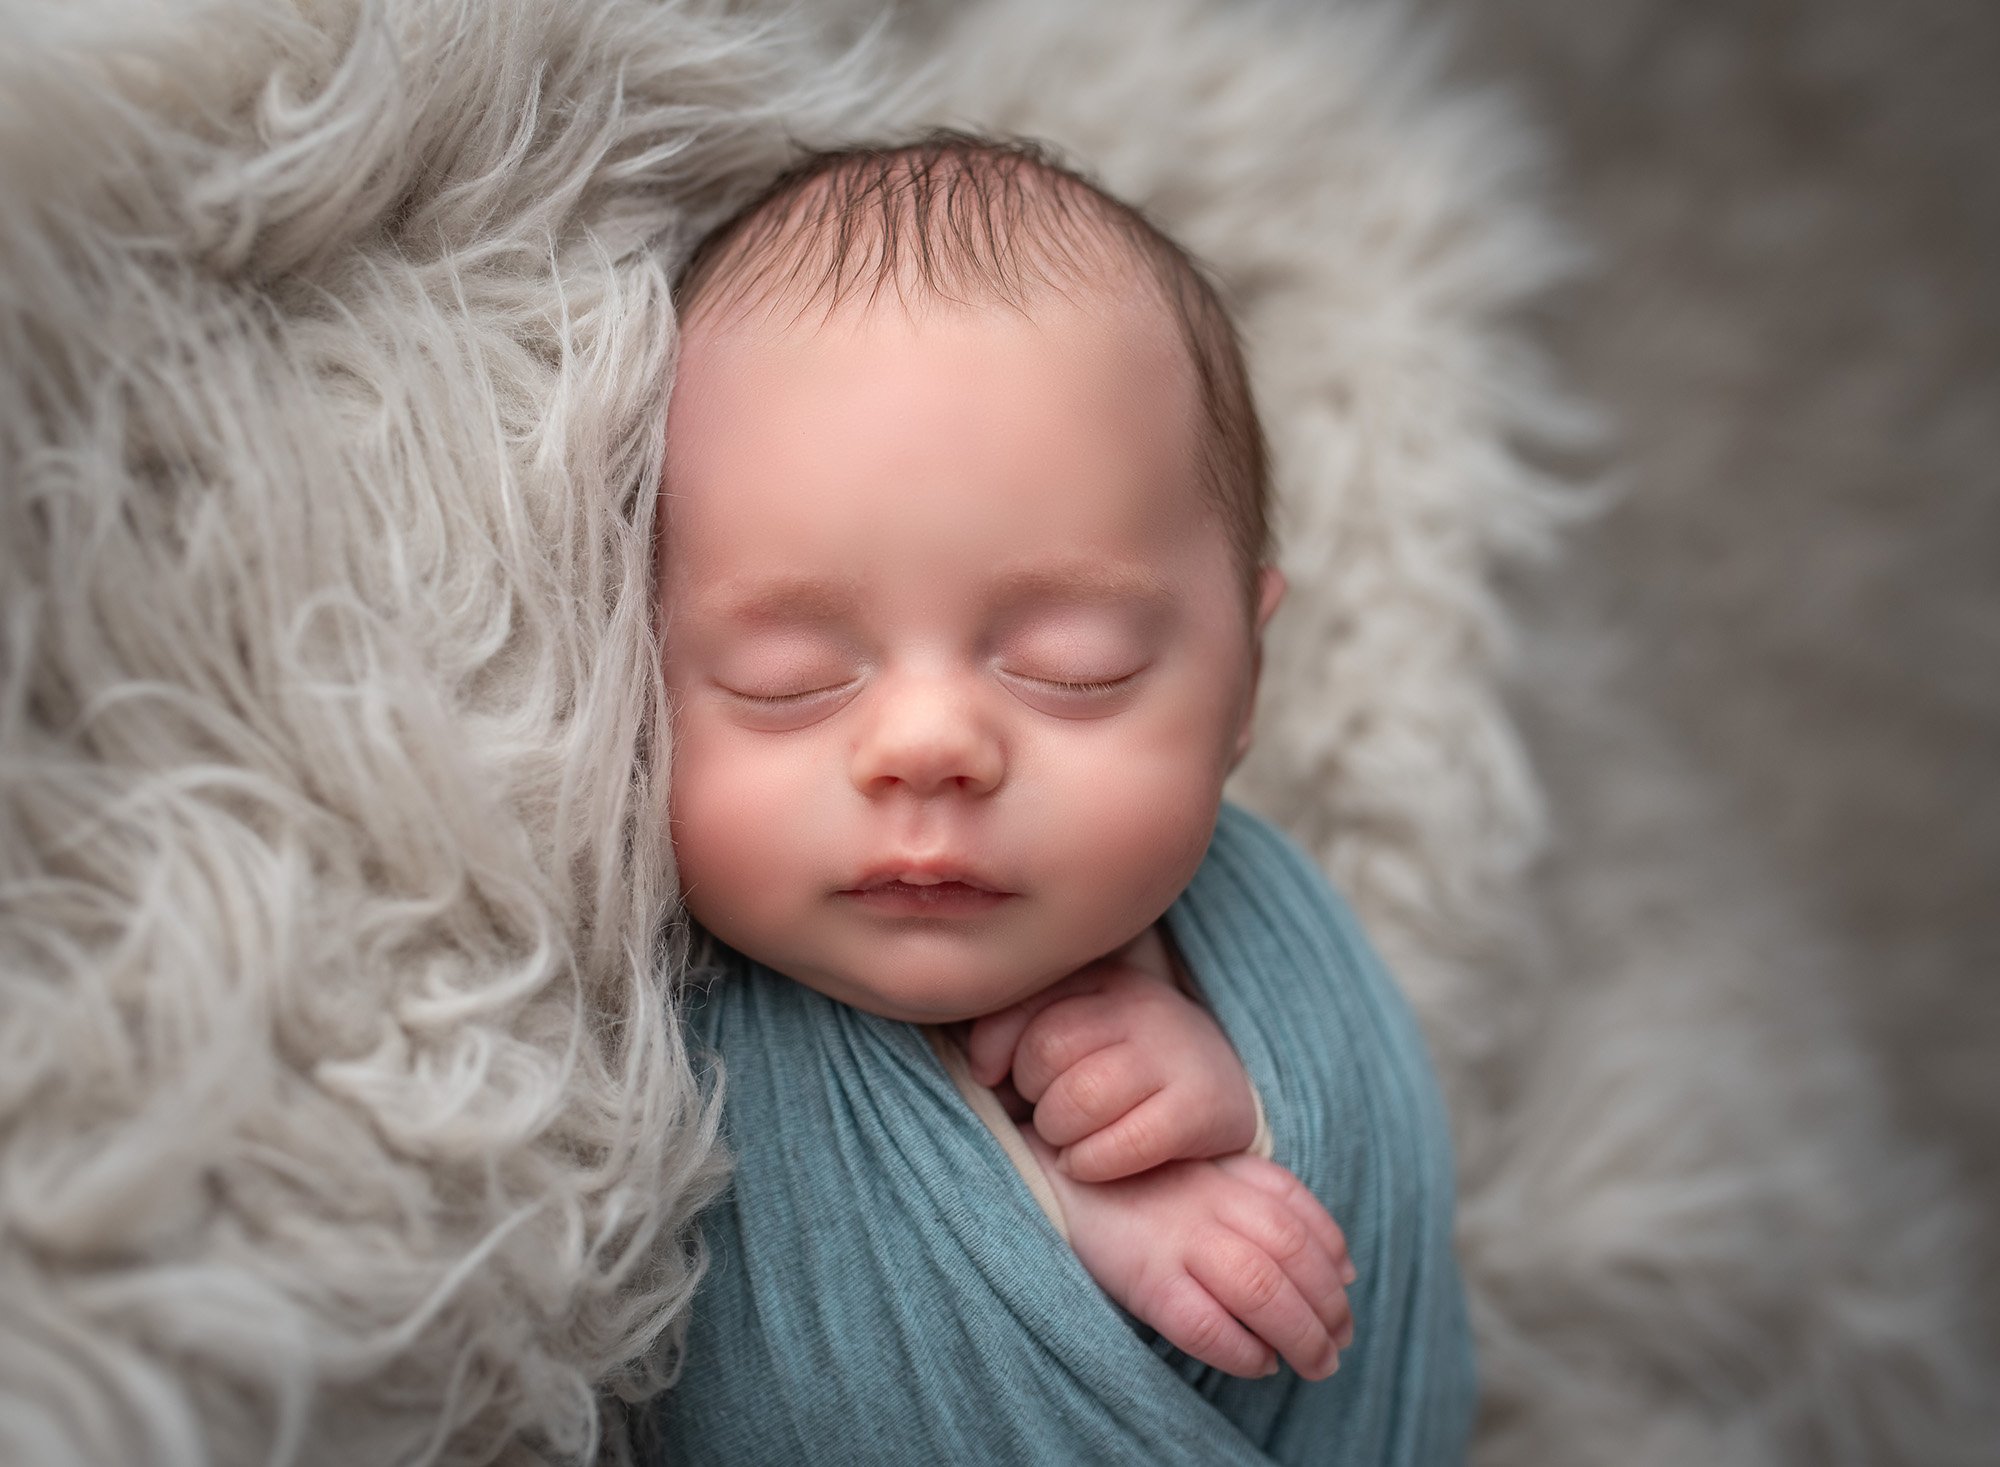 newborn baby boy wrapped in blue asleep on fluffy blanket